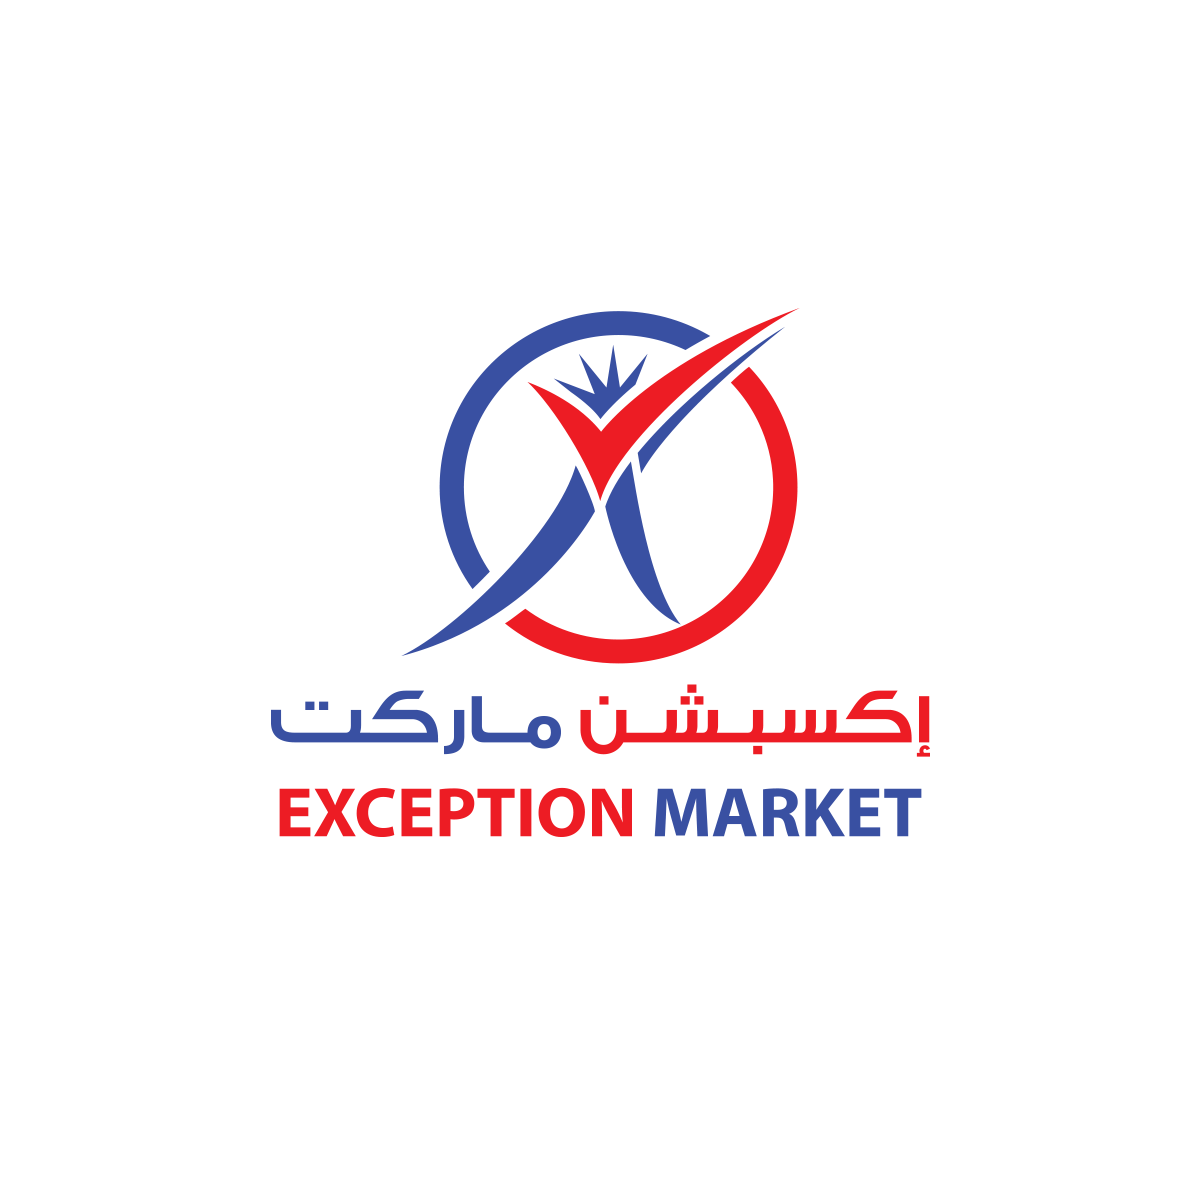 اكسبشن ماركت Exception Market